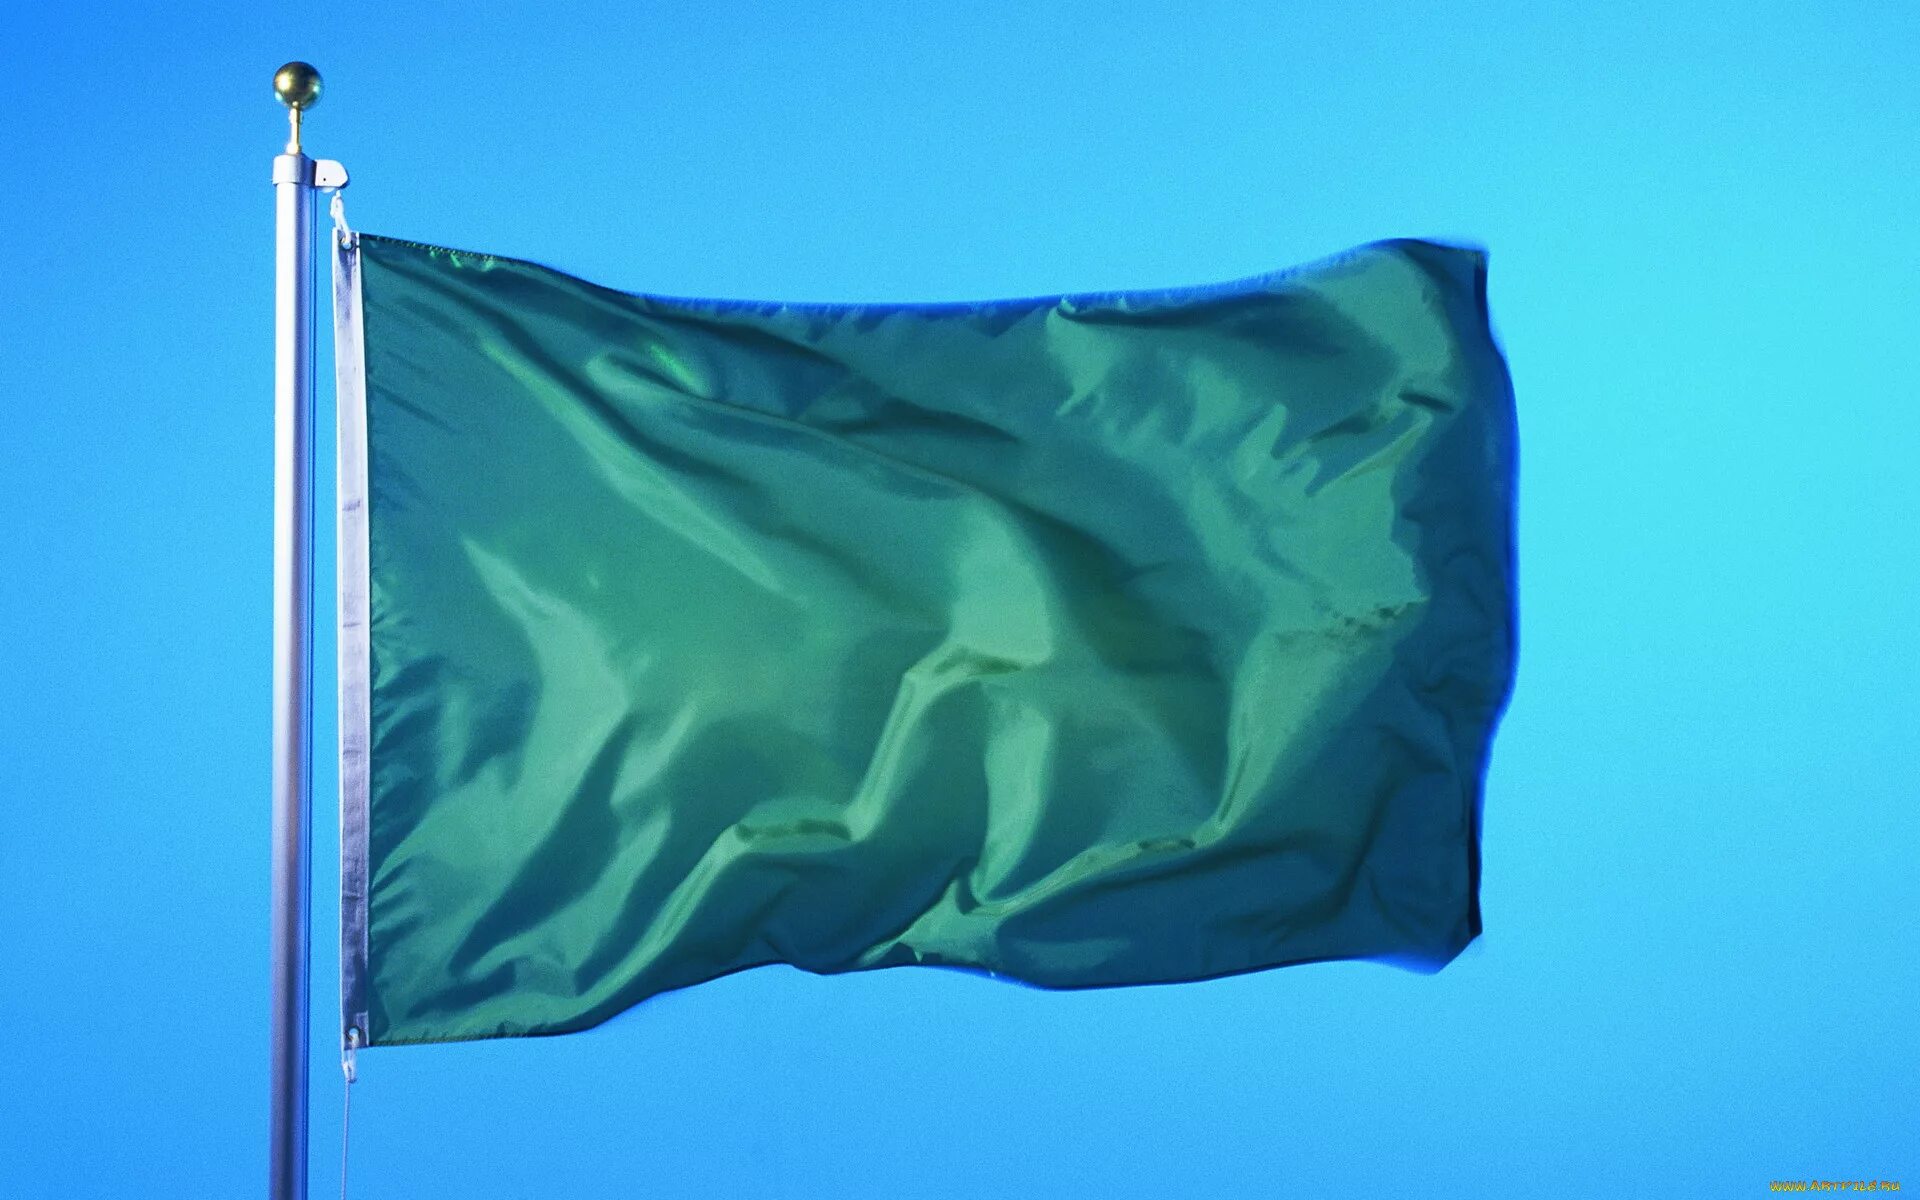 Зеленый флаг в россии. Флаг Джамахирии. Ливия флаг зеленый. Флаг Джамахирии зеленый. Зеленое Знамя.